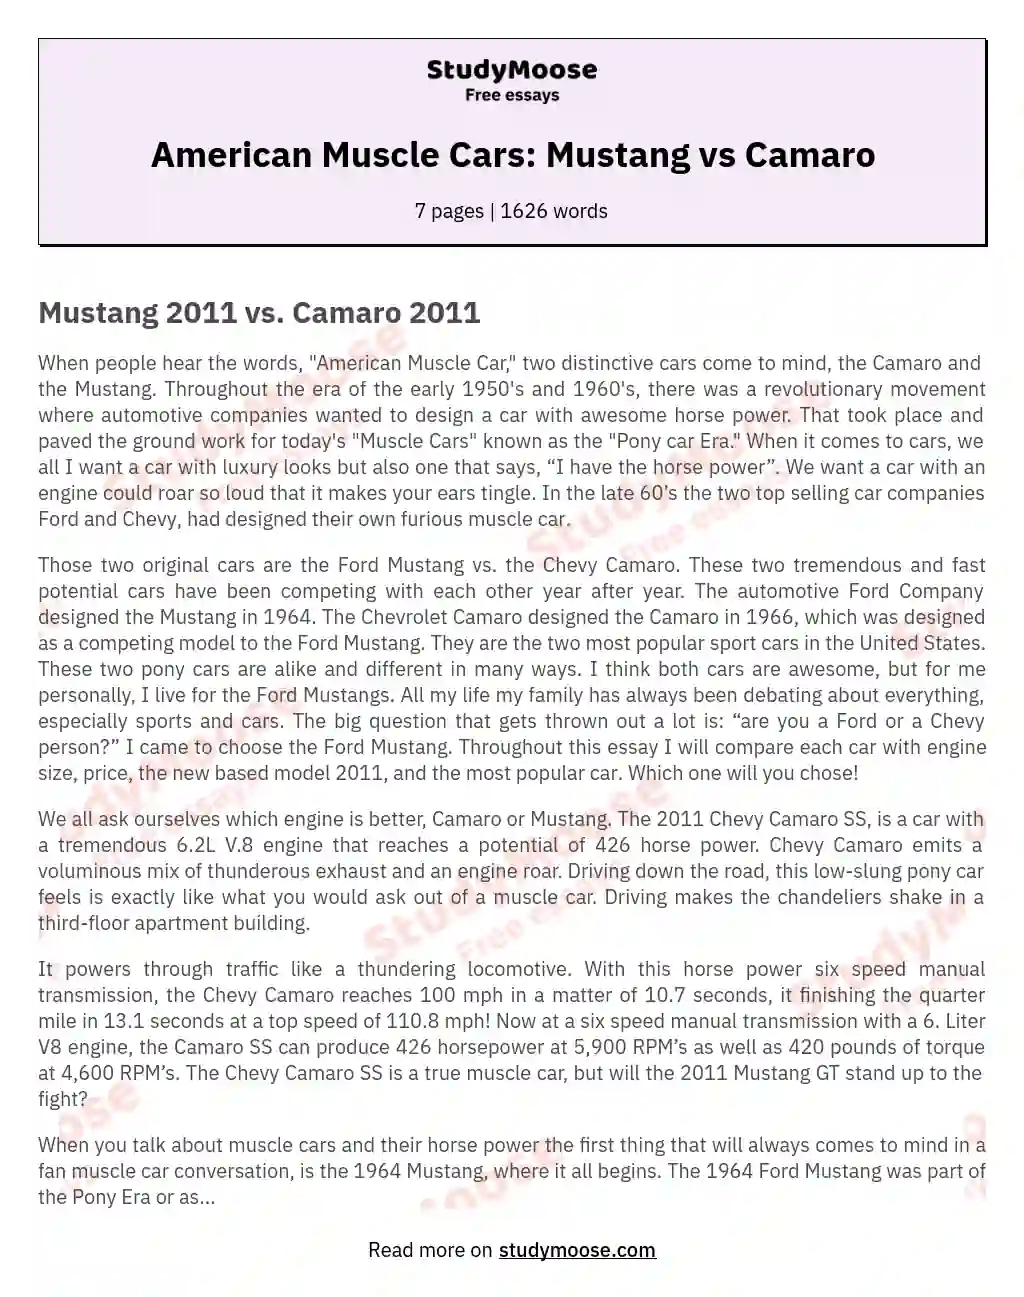 American Muscle Cars: Mustang vs Camaro essay